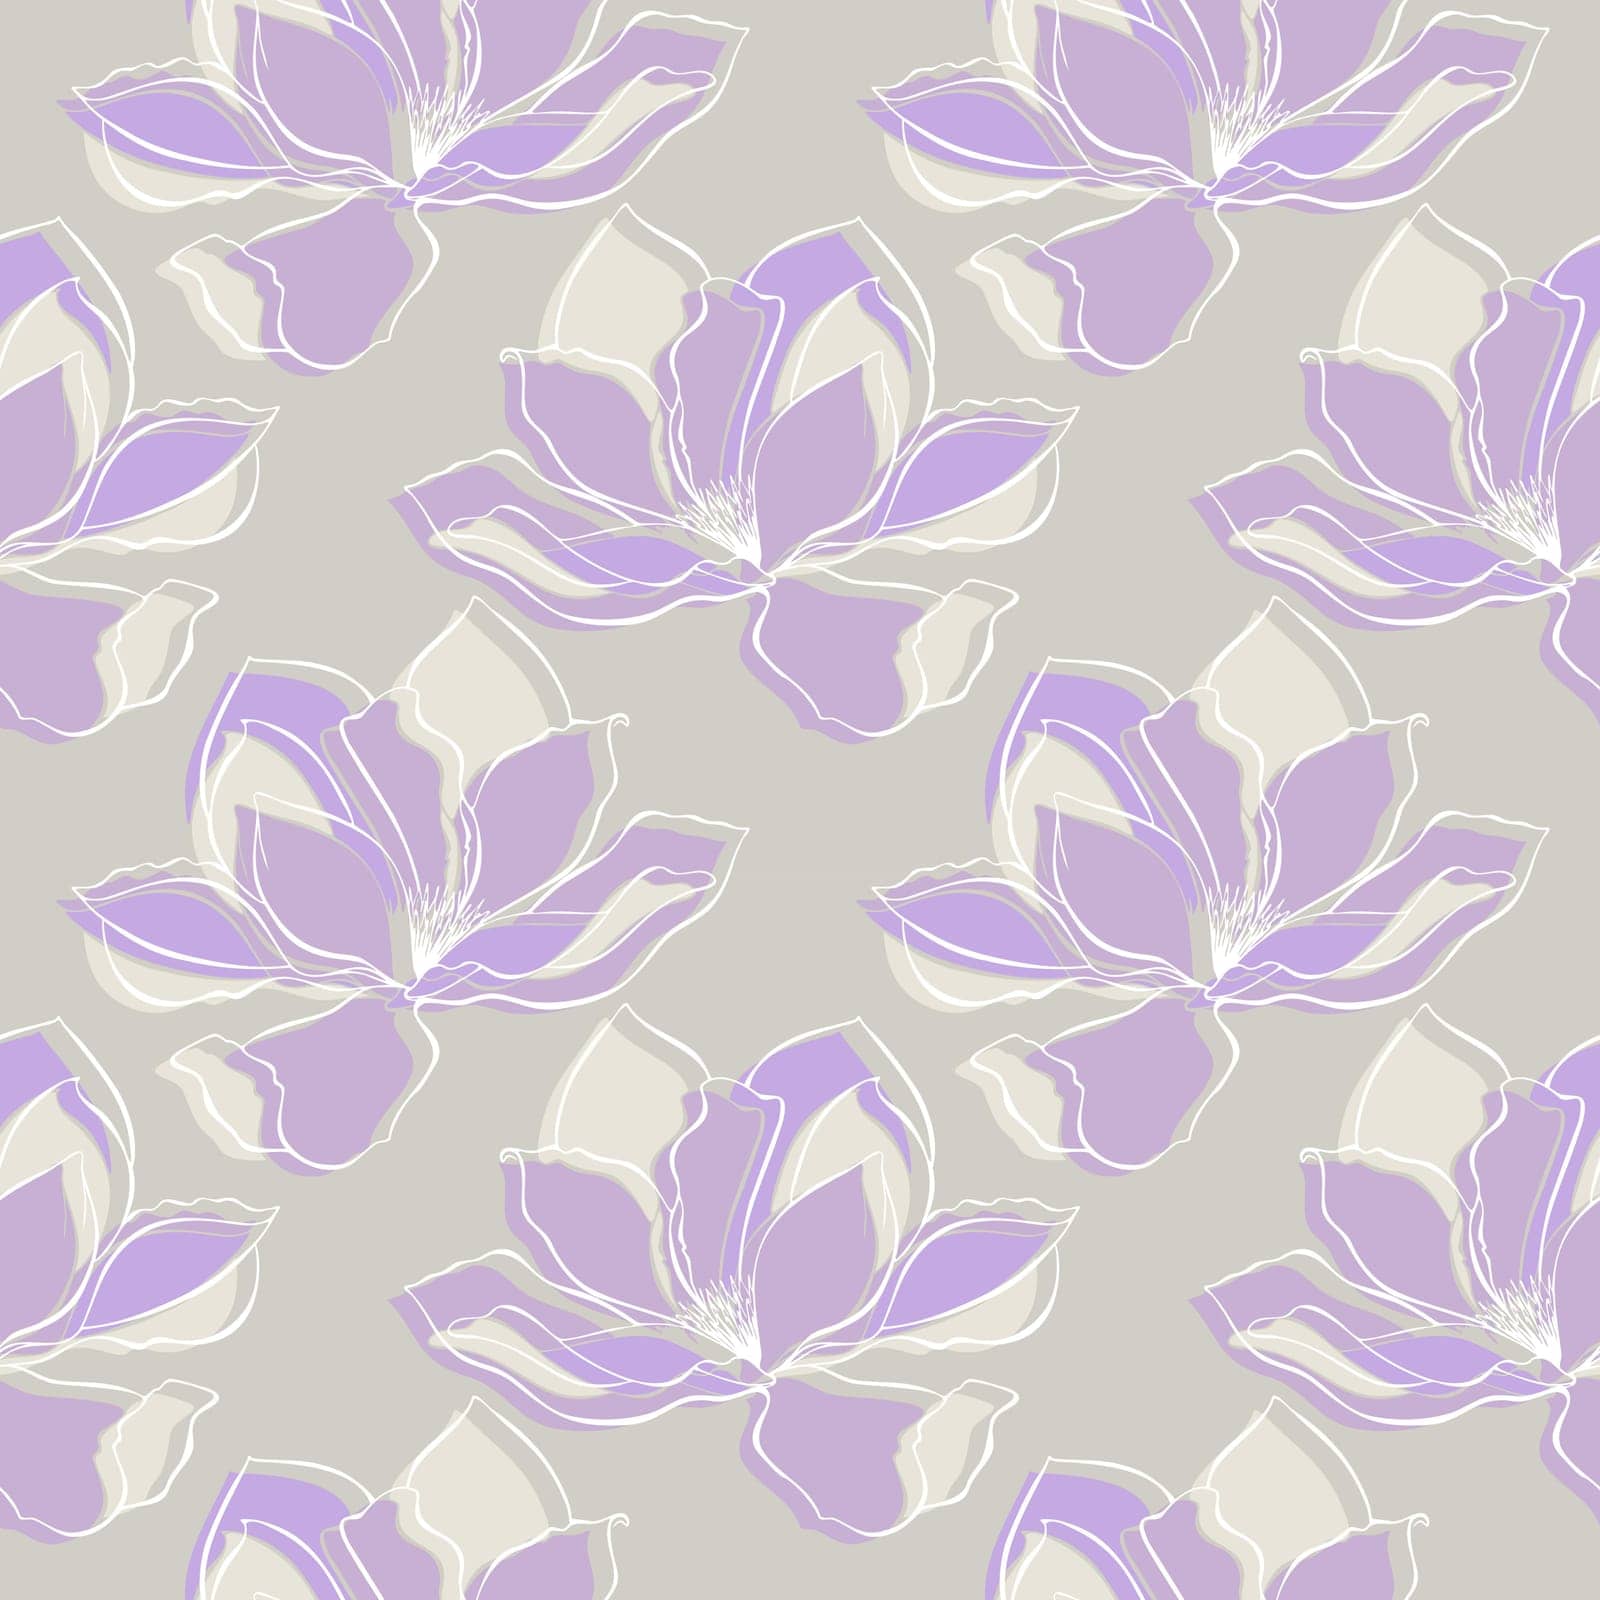 Magnolia violet pattern,contour flowers. by Margo